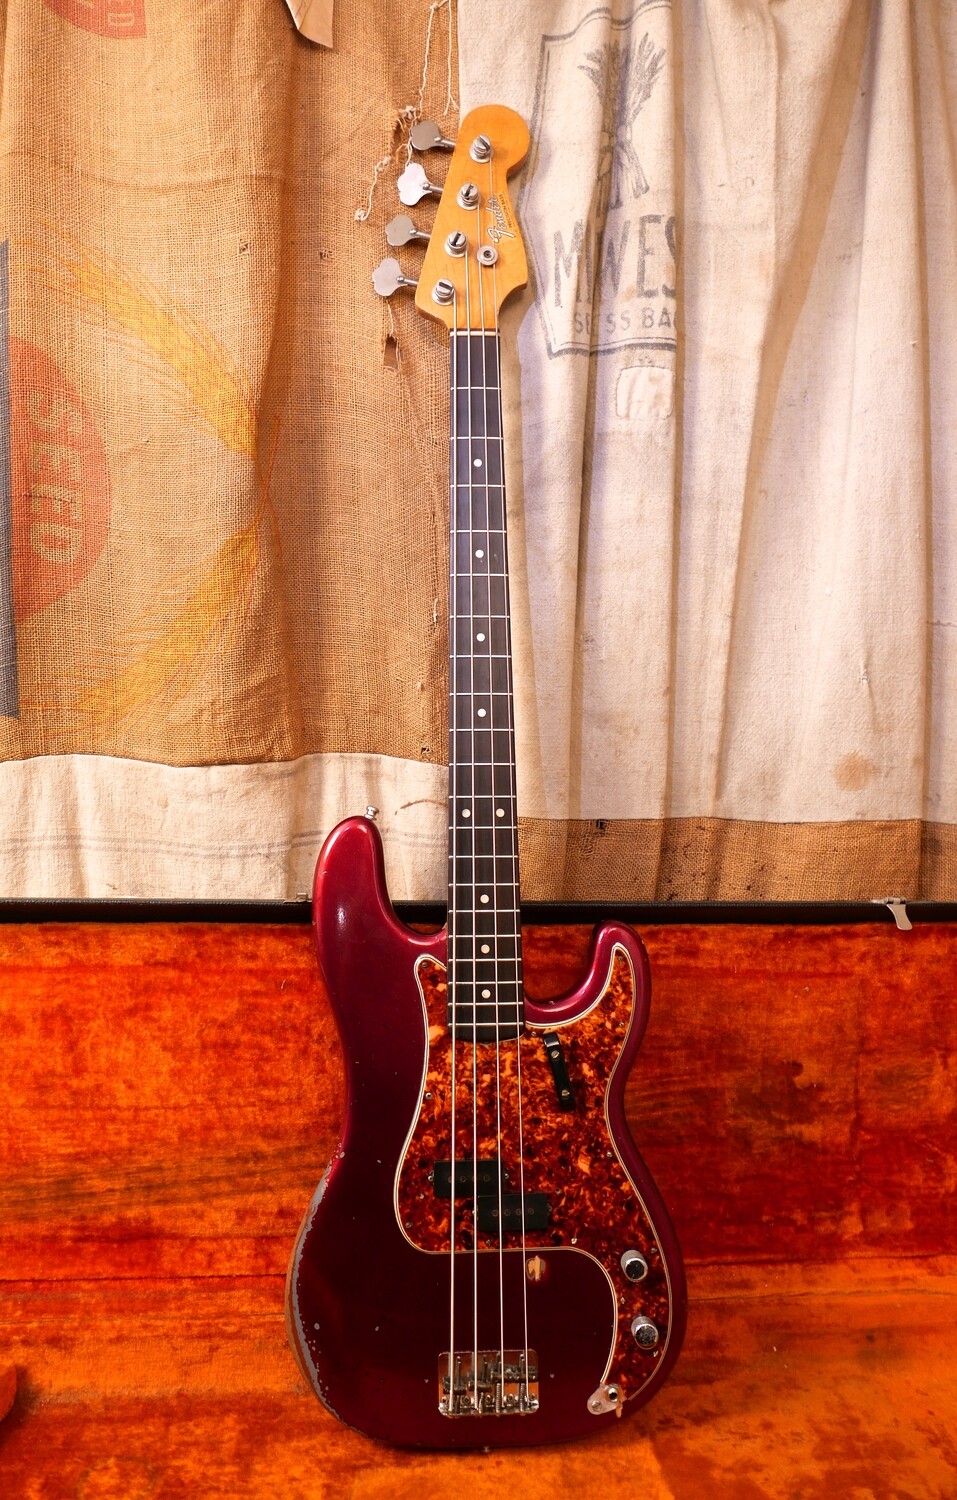 1965 Fender Precision Bass Red Sparkle Refin